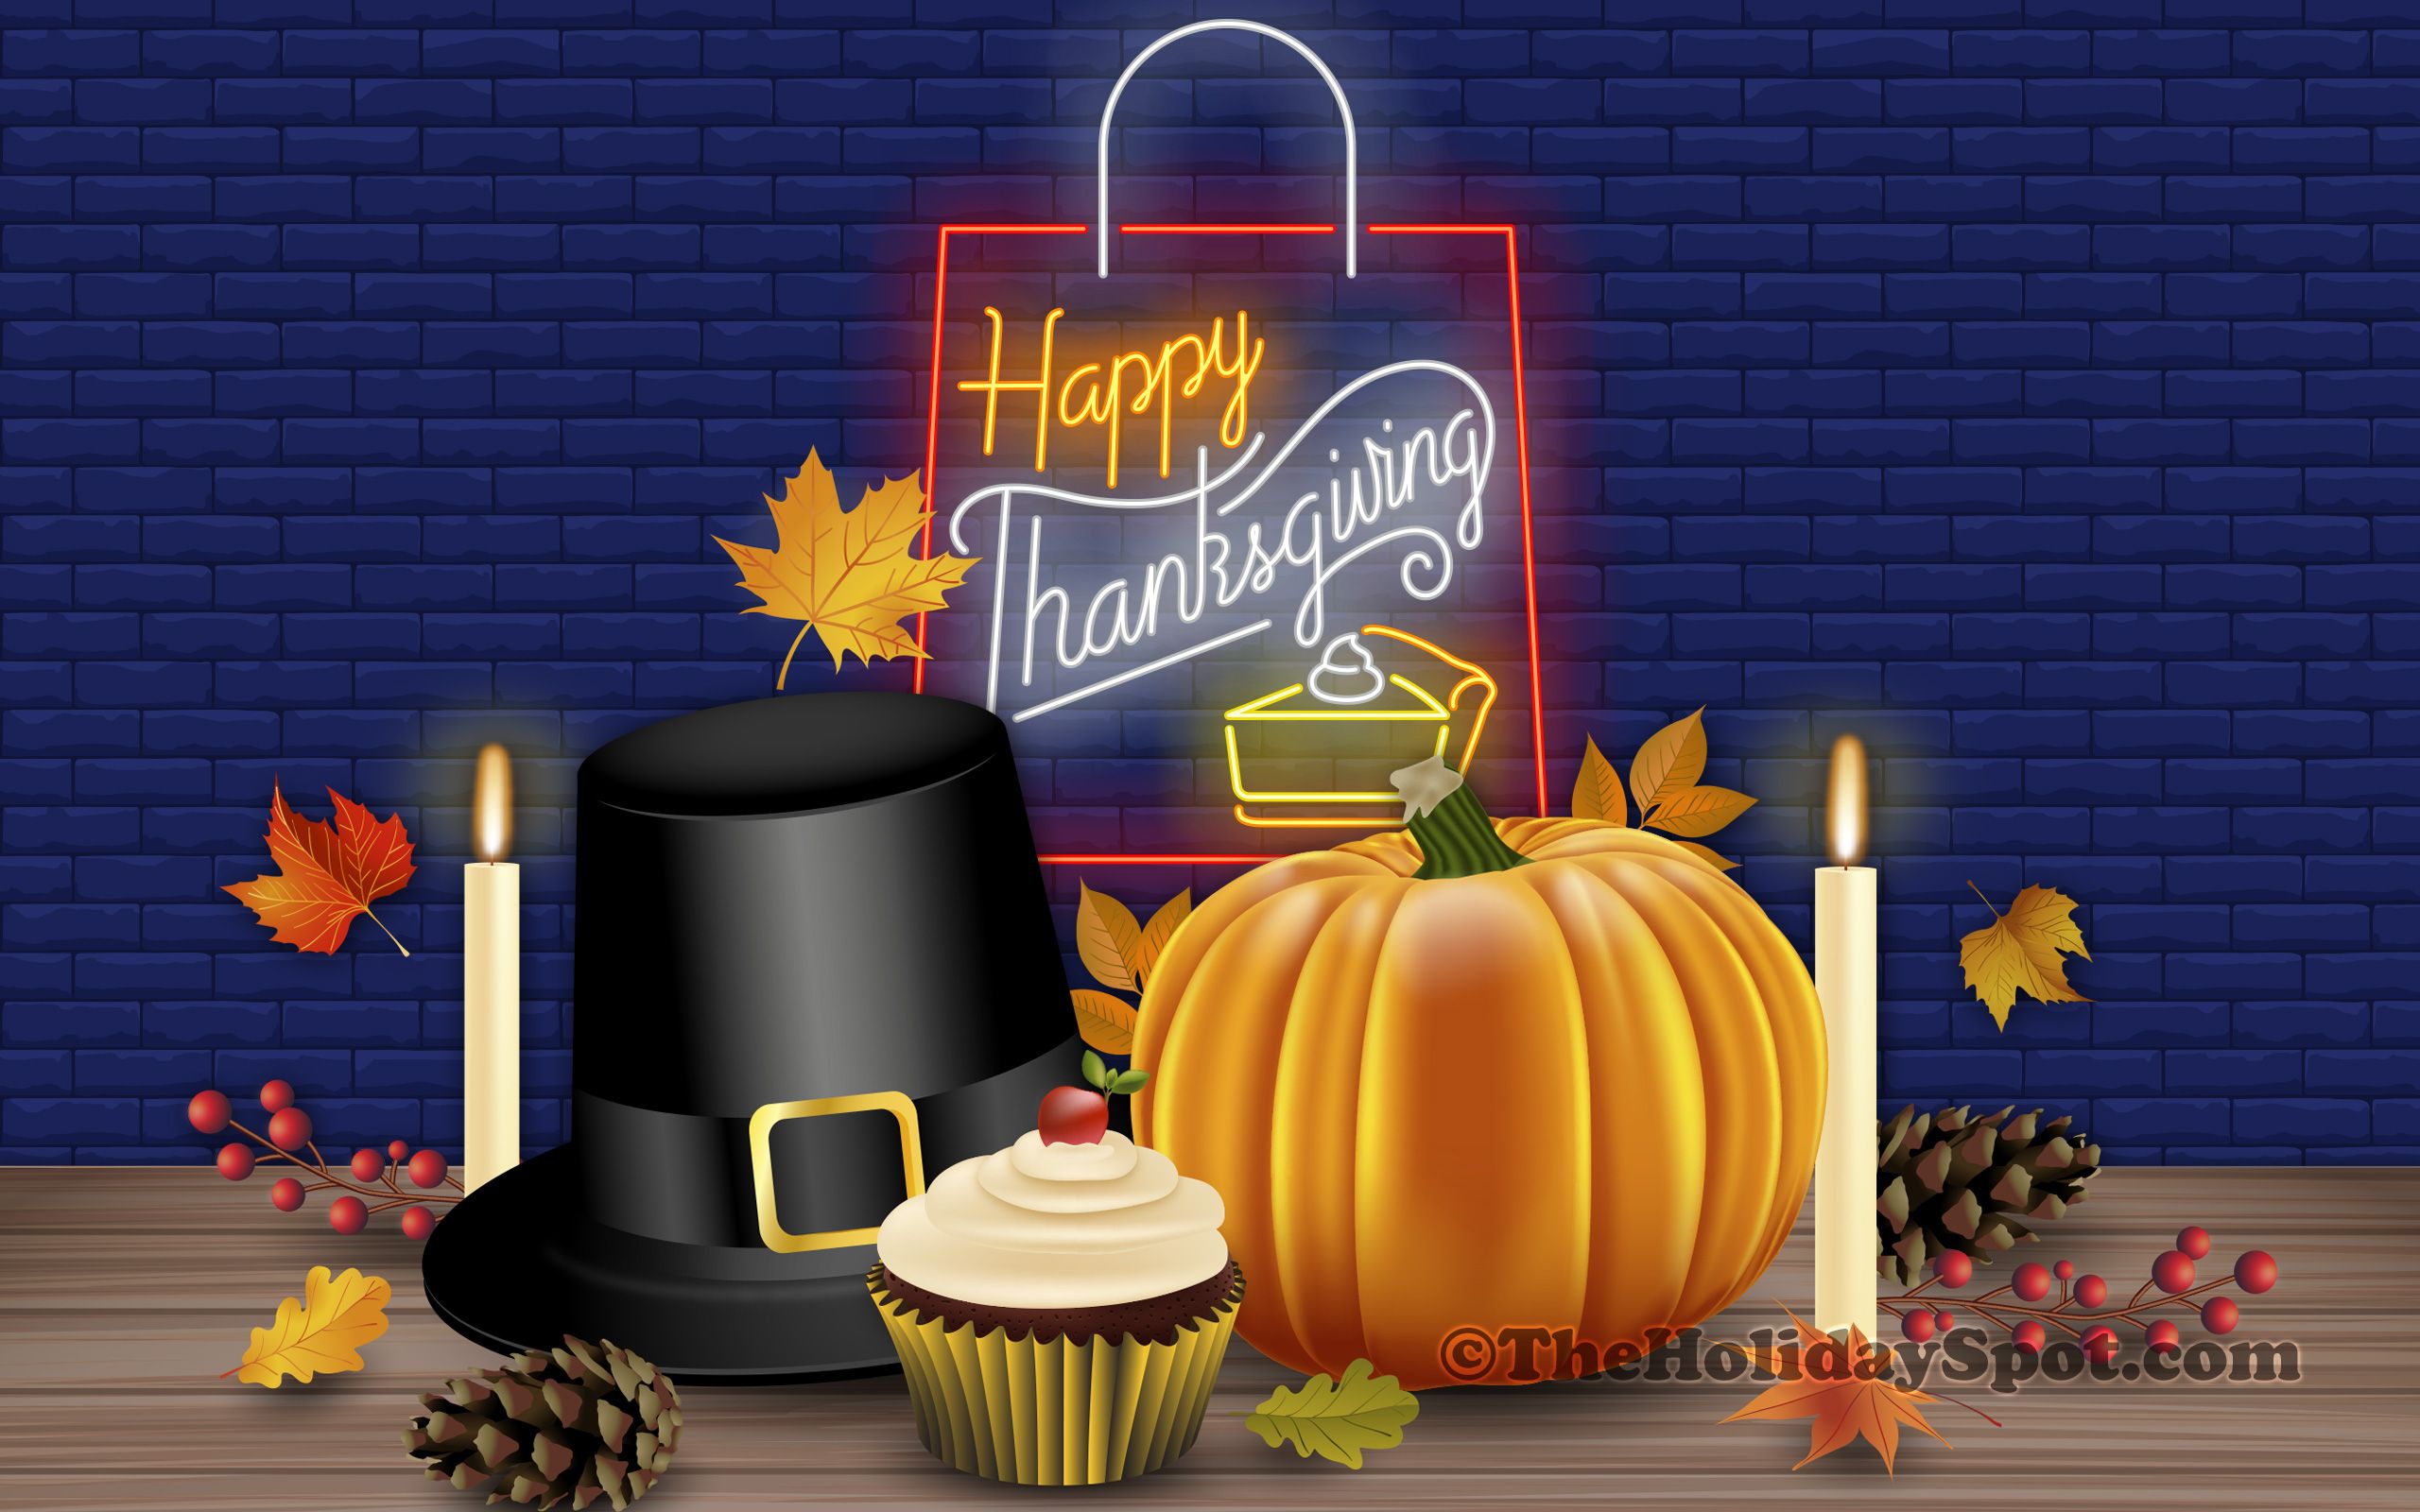 Thanksgiving Wallpaper HD. Happy Thanksgiving Wallpaper, Desktop and Background Image